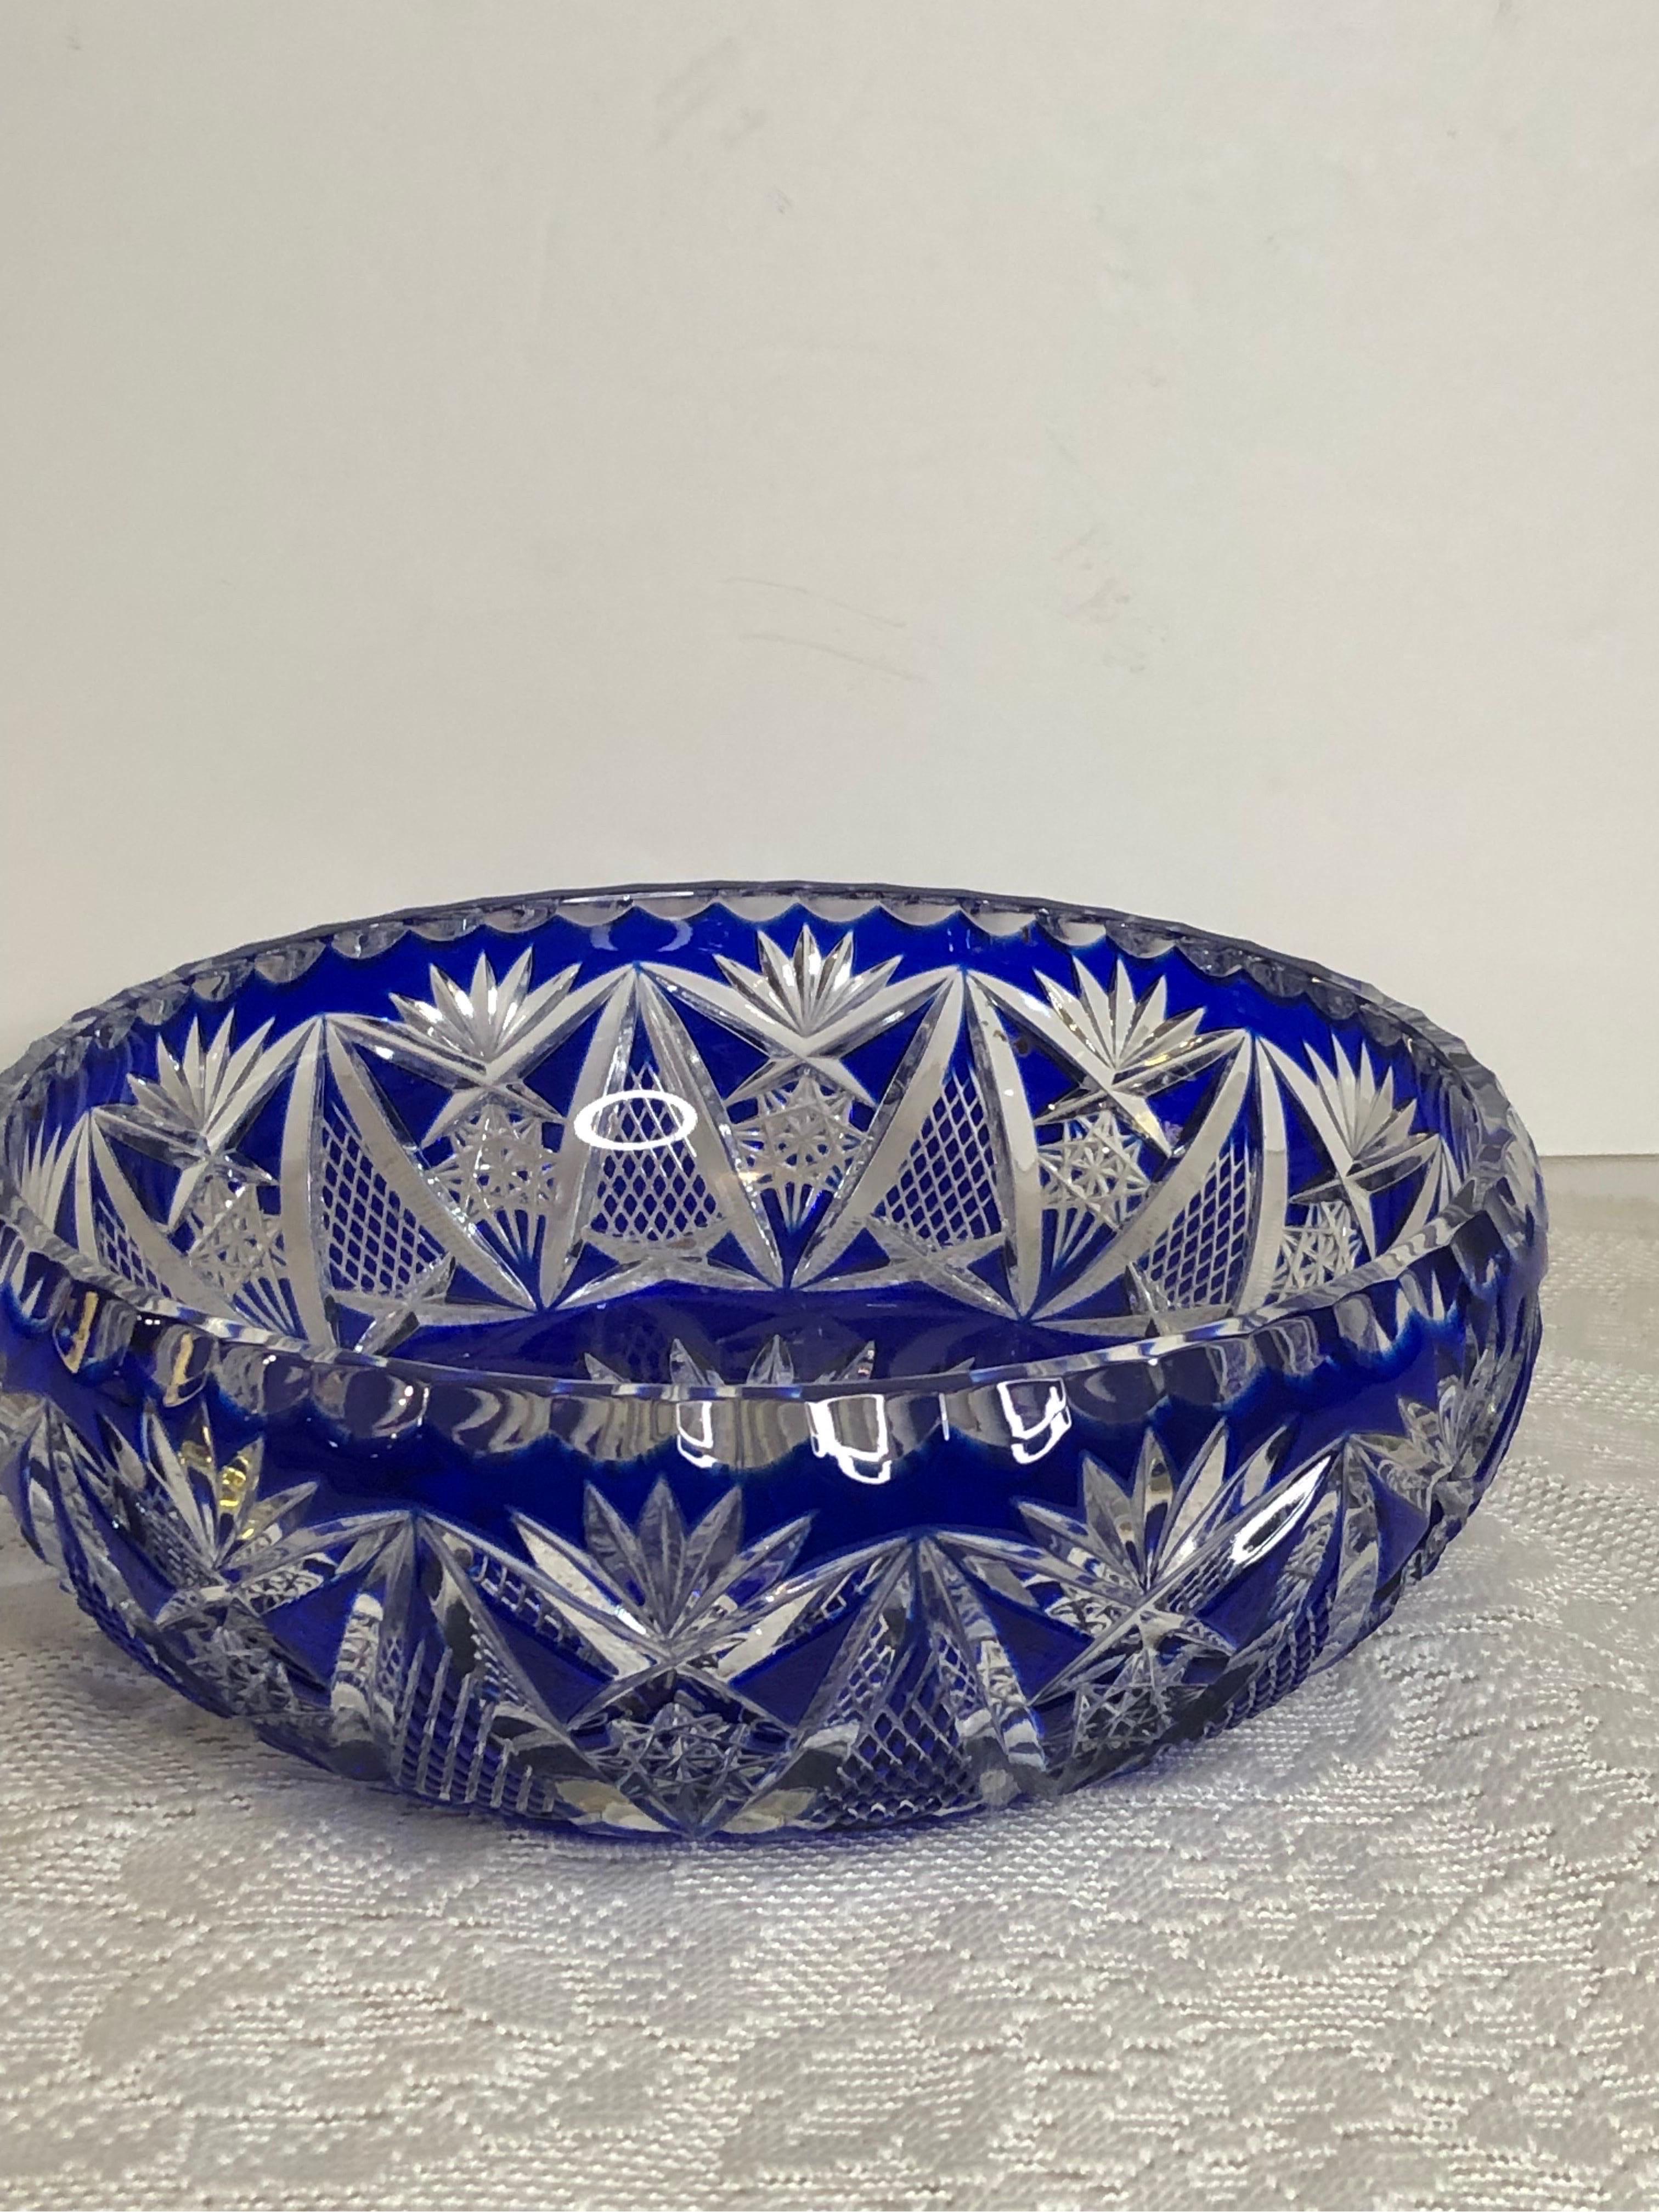 Other Cobalt Bohemian Czechoslovakian Crystal Bowl with a Deep Intricate Cut Pattern